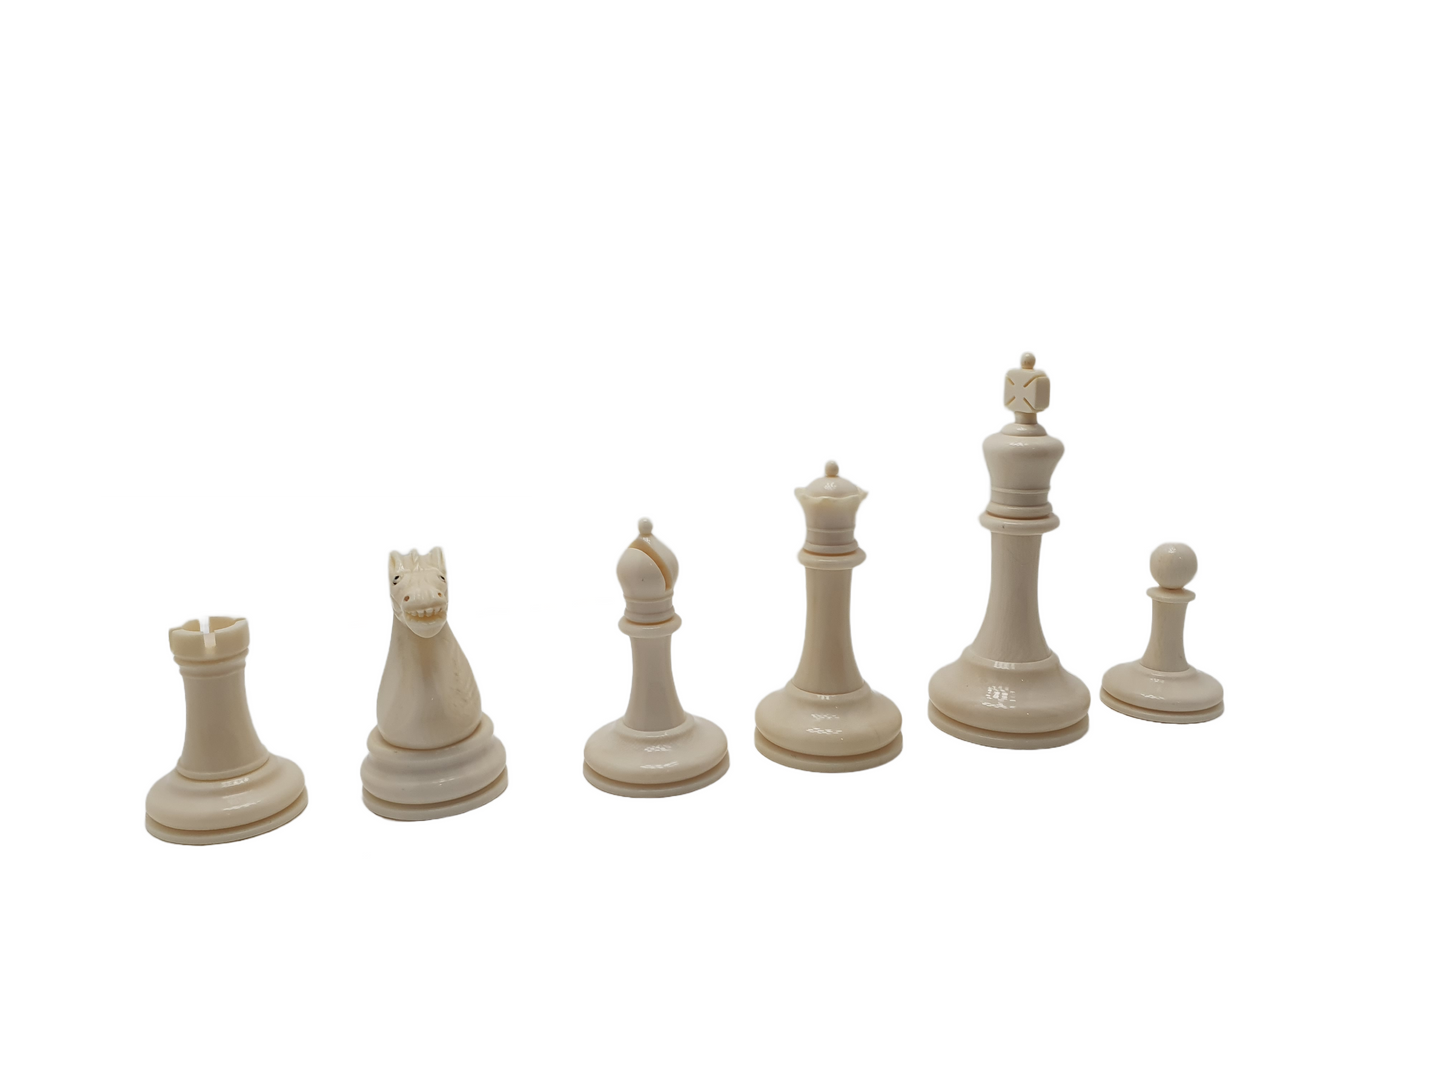 Red and White Staunton Style Chess Set Circa 1900